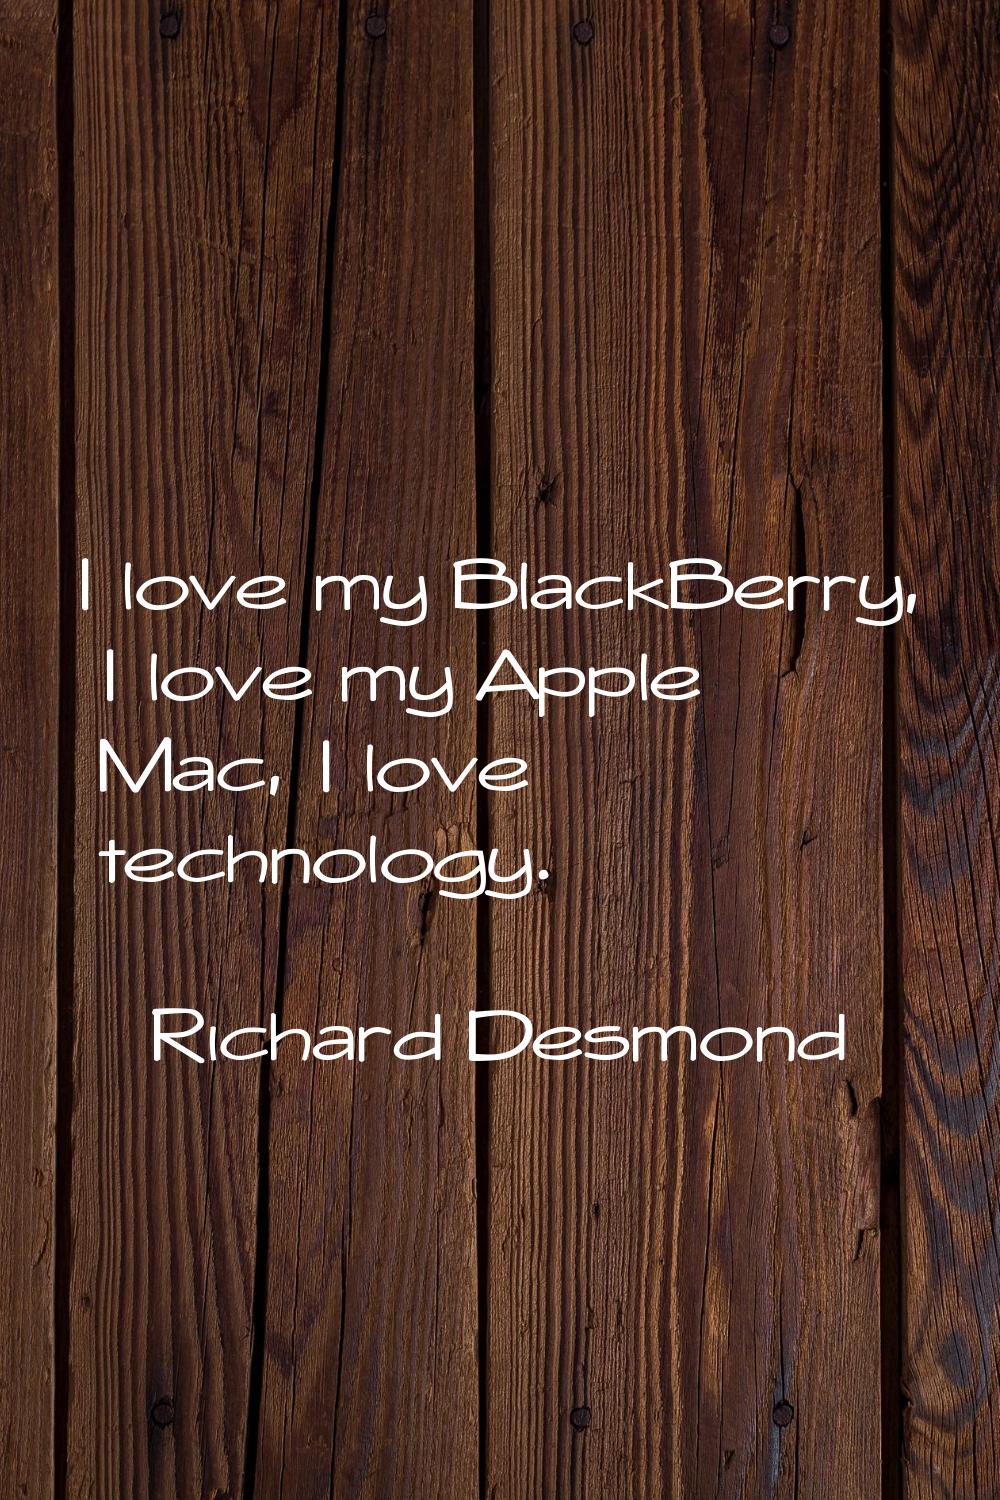 I love my BlackBerry, I love my Apple Mac, I love technology.